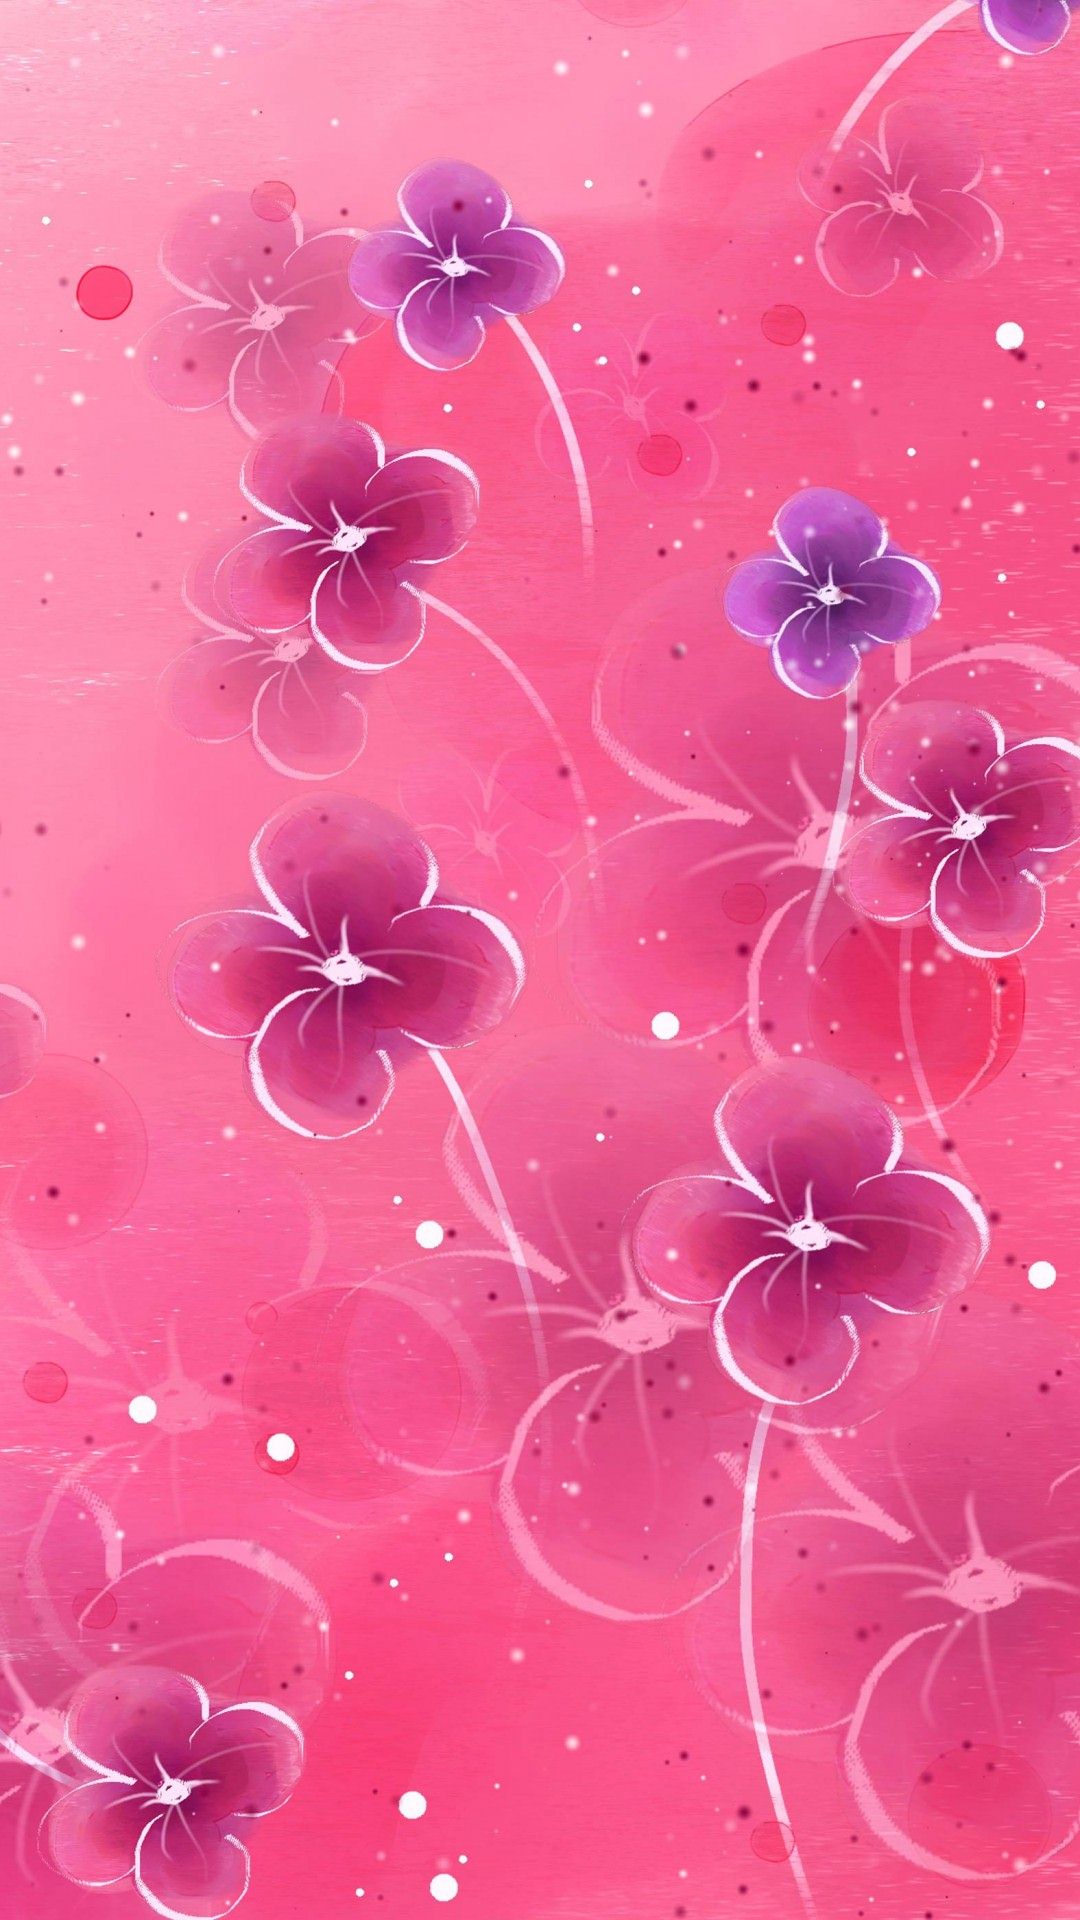 Flower iPhone Backgrounds | PixelsTalk.Net